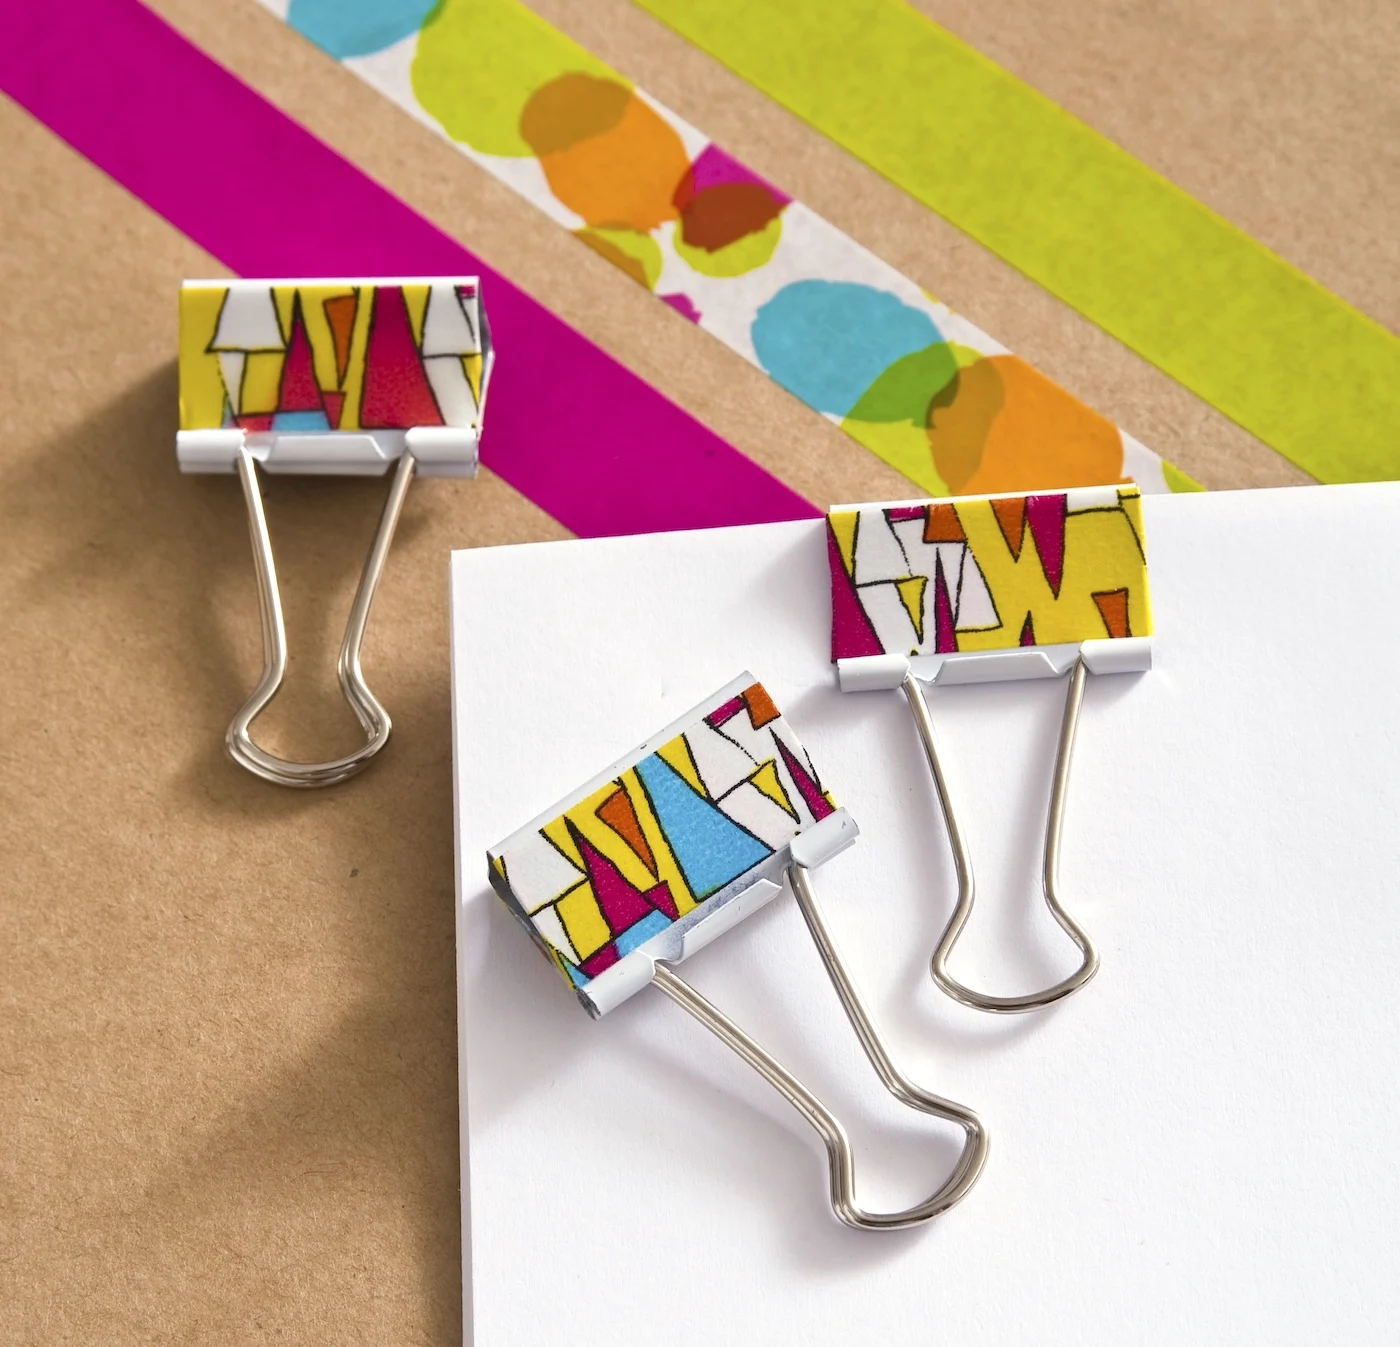 Washi tape decorated binder clips